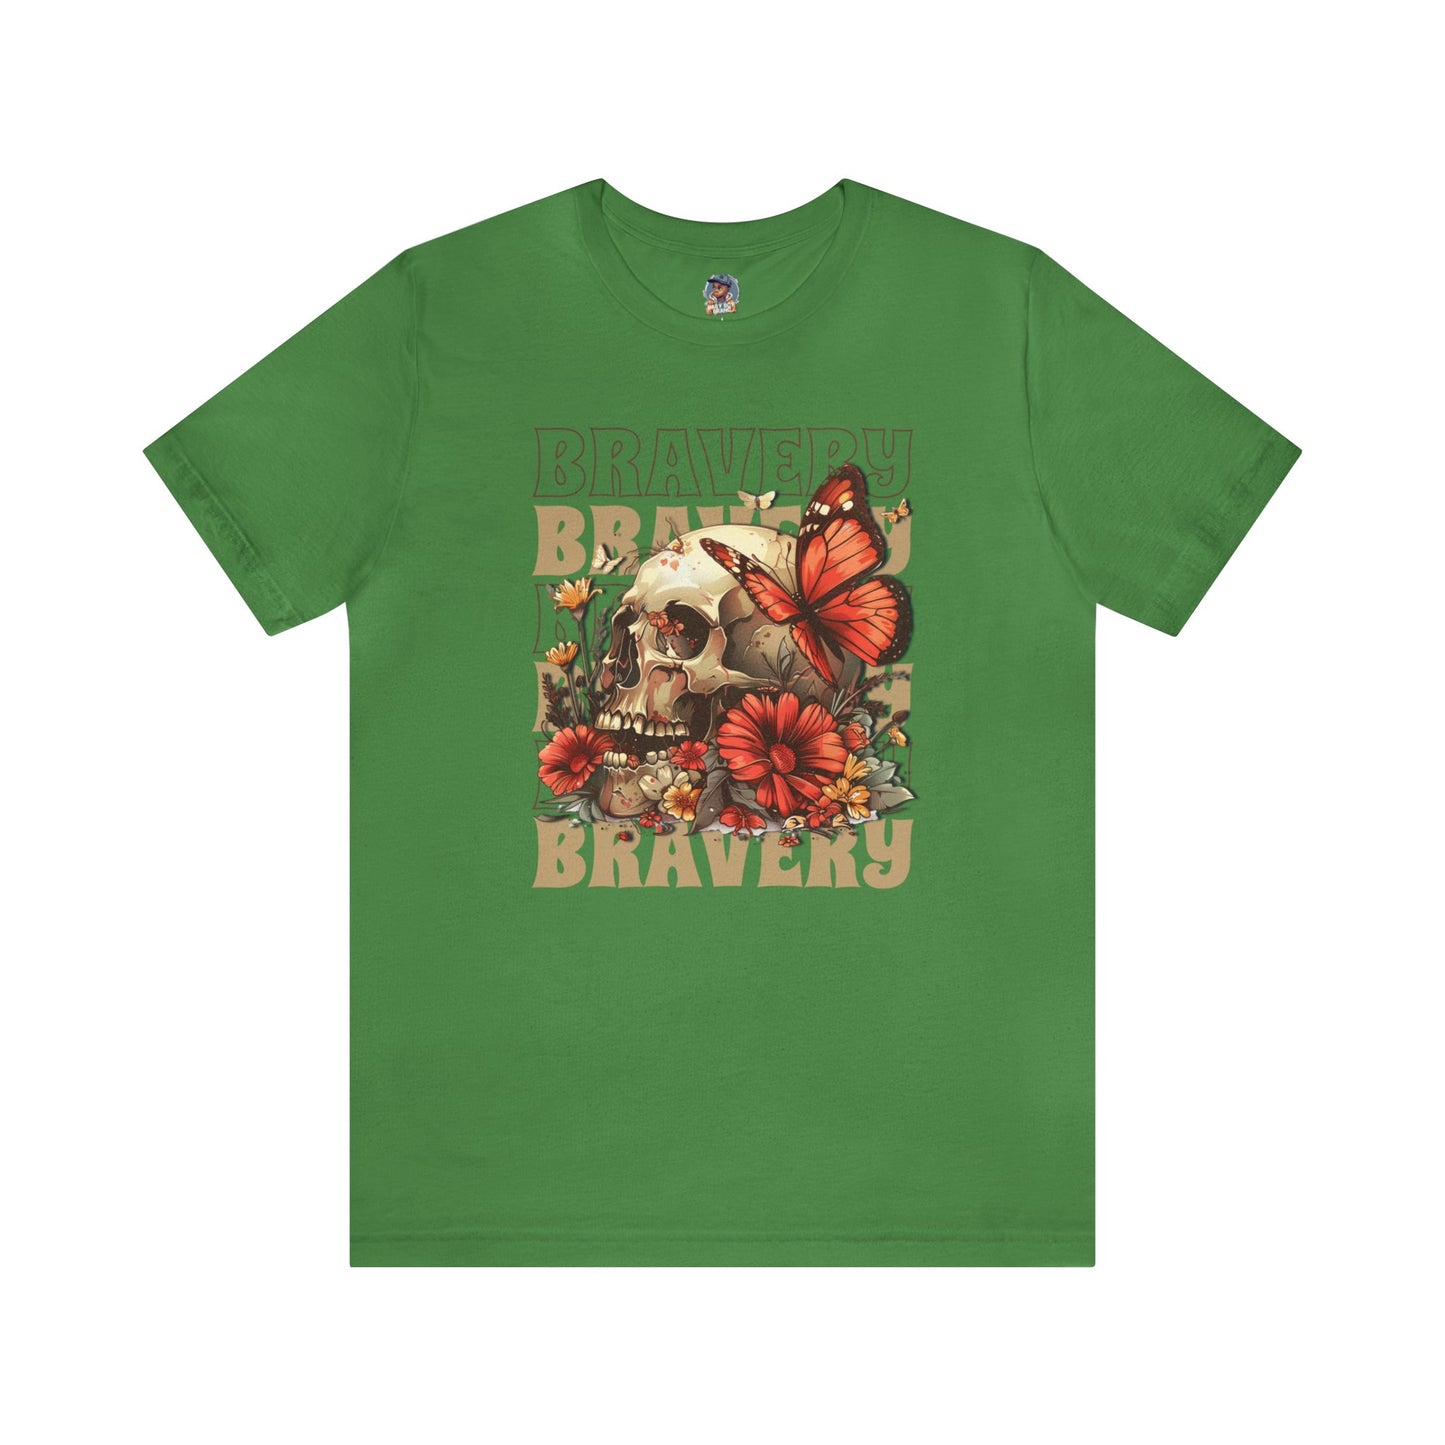 "Bravery T-Shirt"